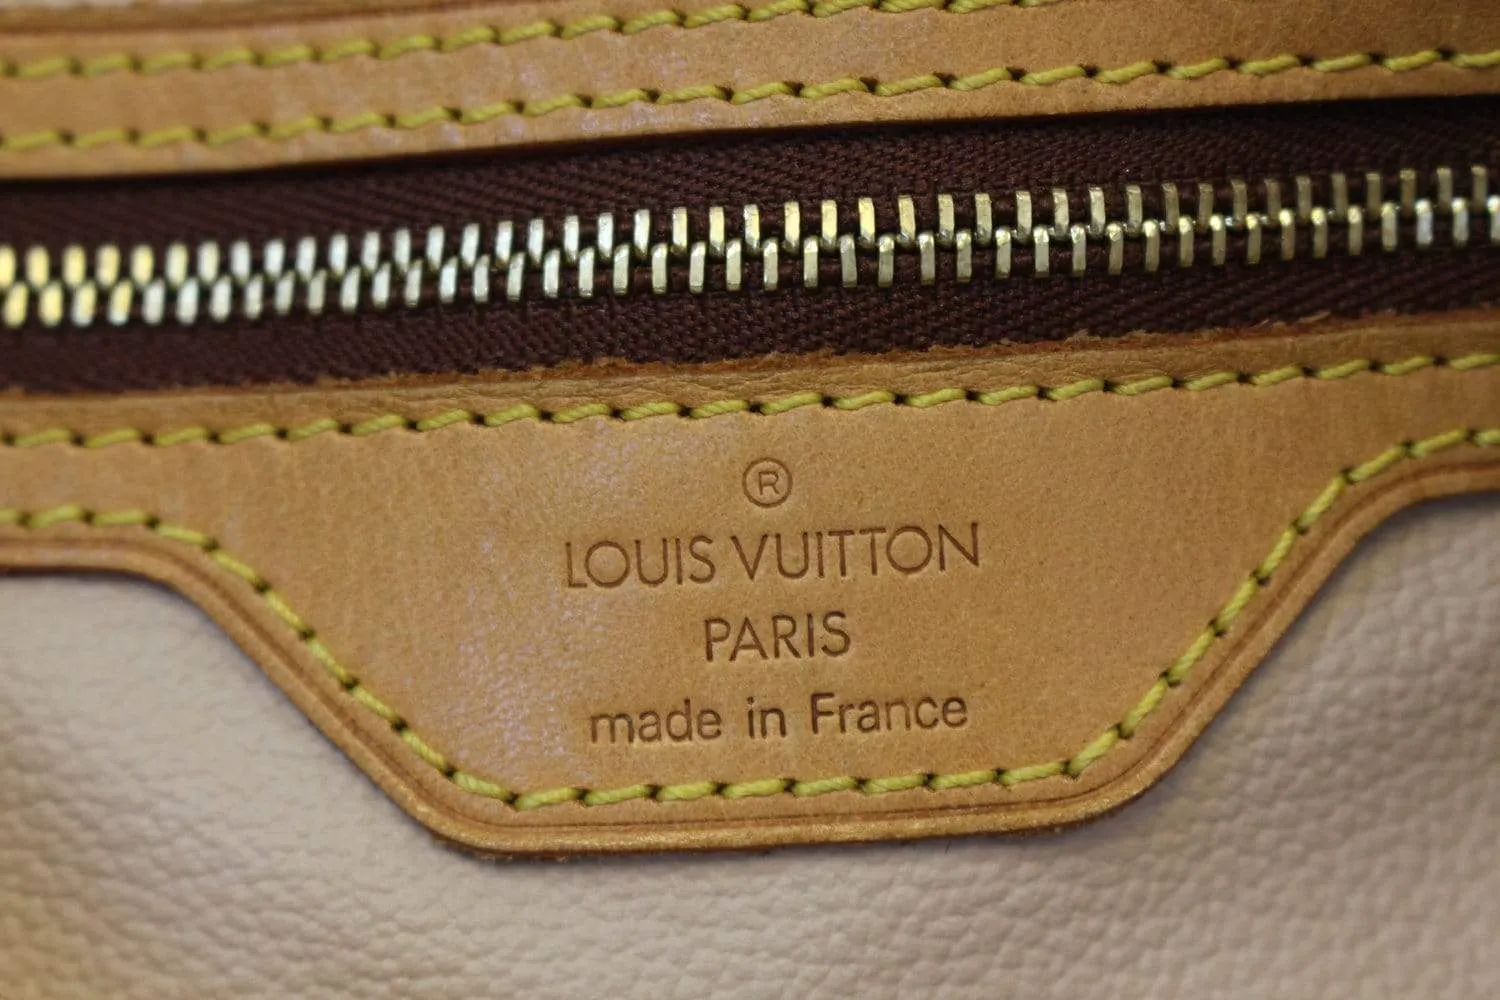 Louis Vuitton Date Code Checker  Authentication Guide